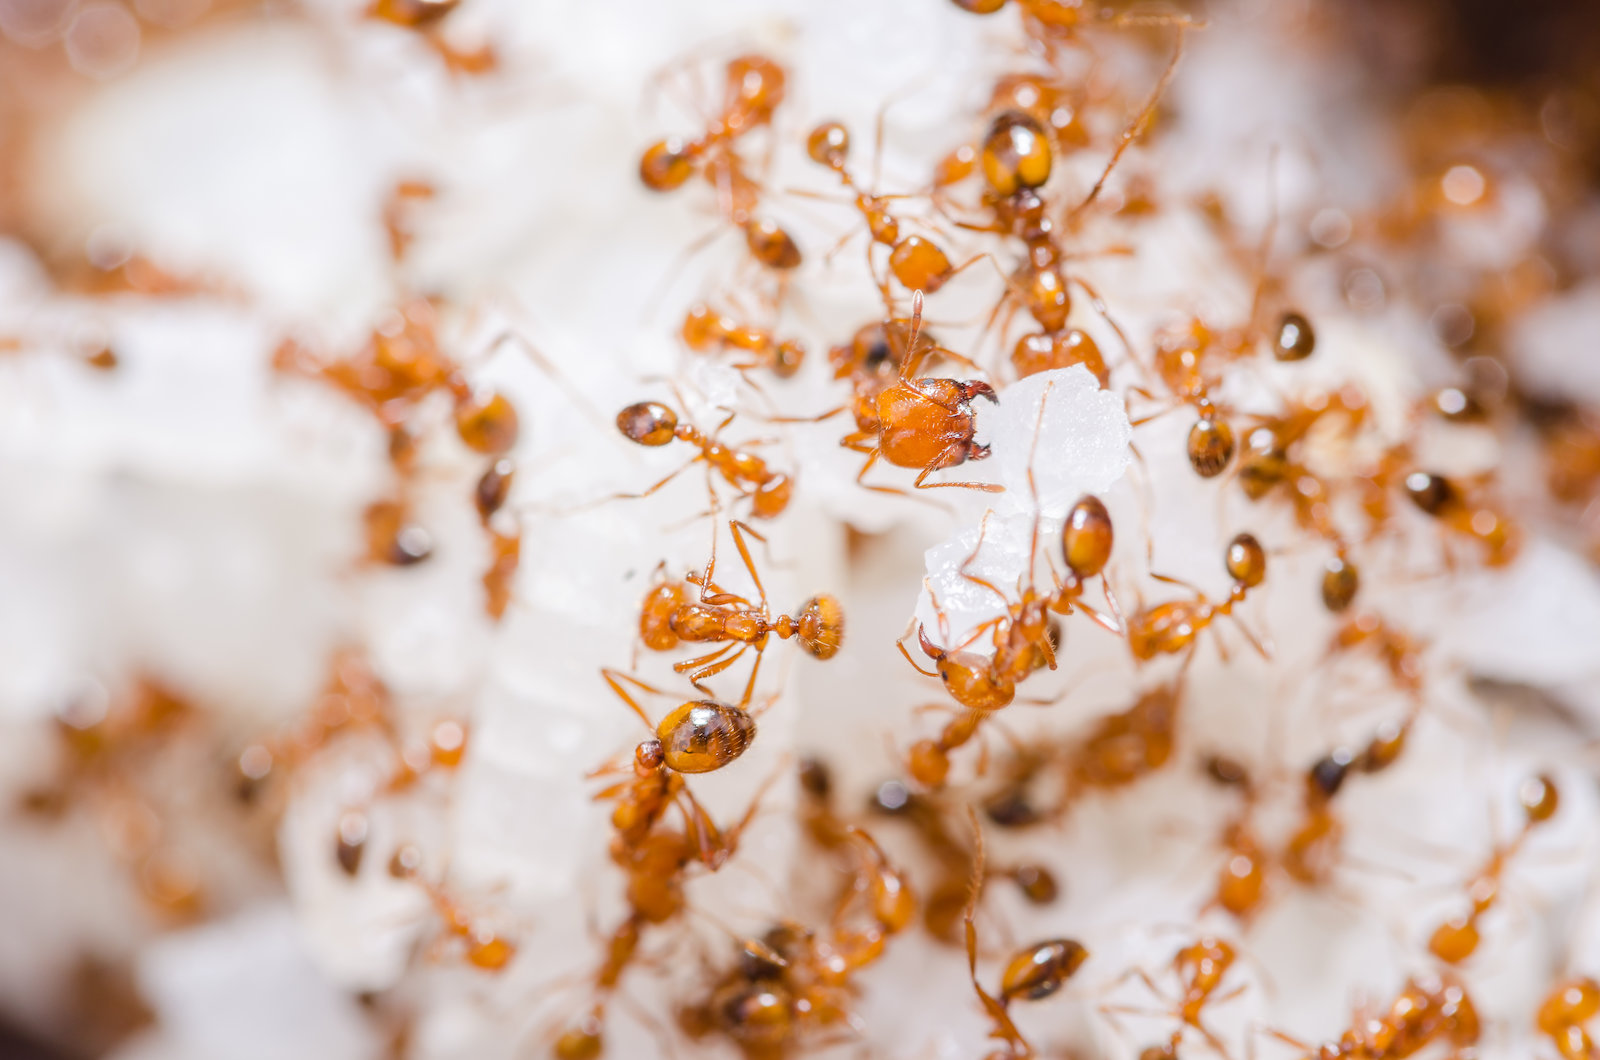 Methods to Eliminate Ants